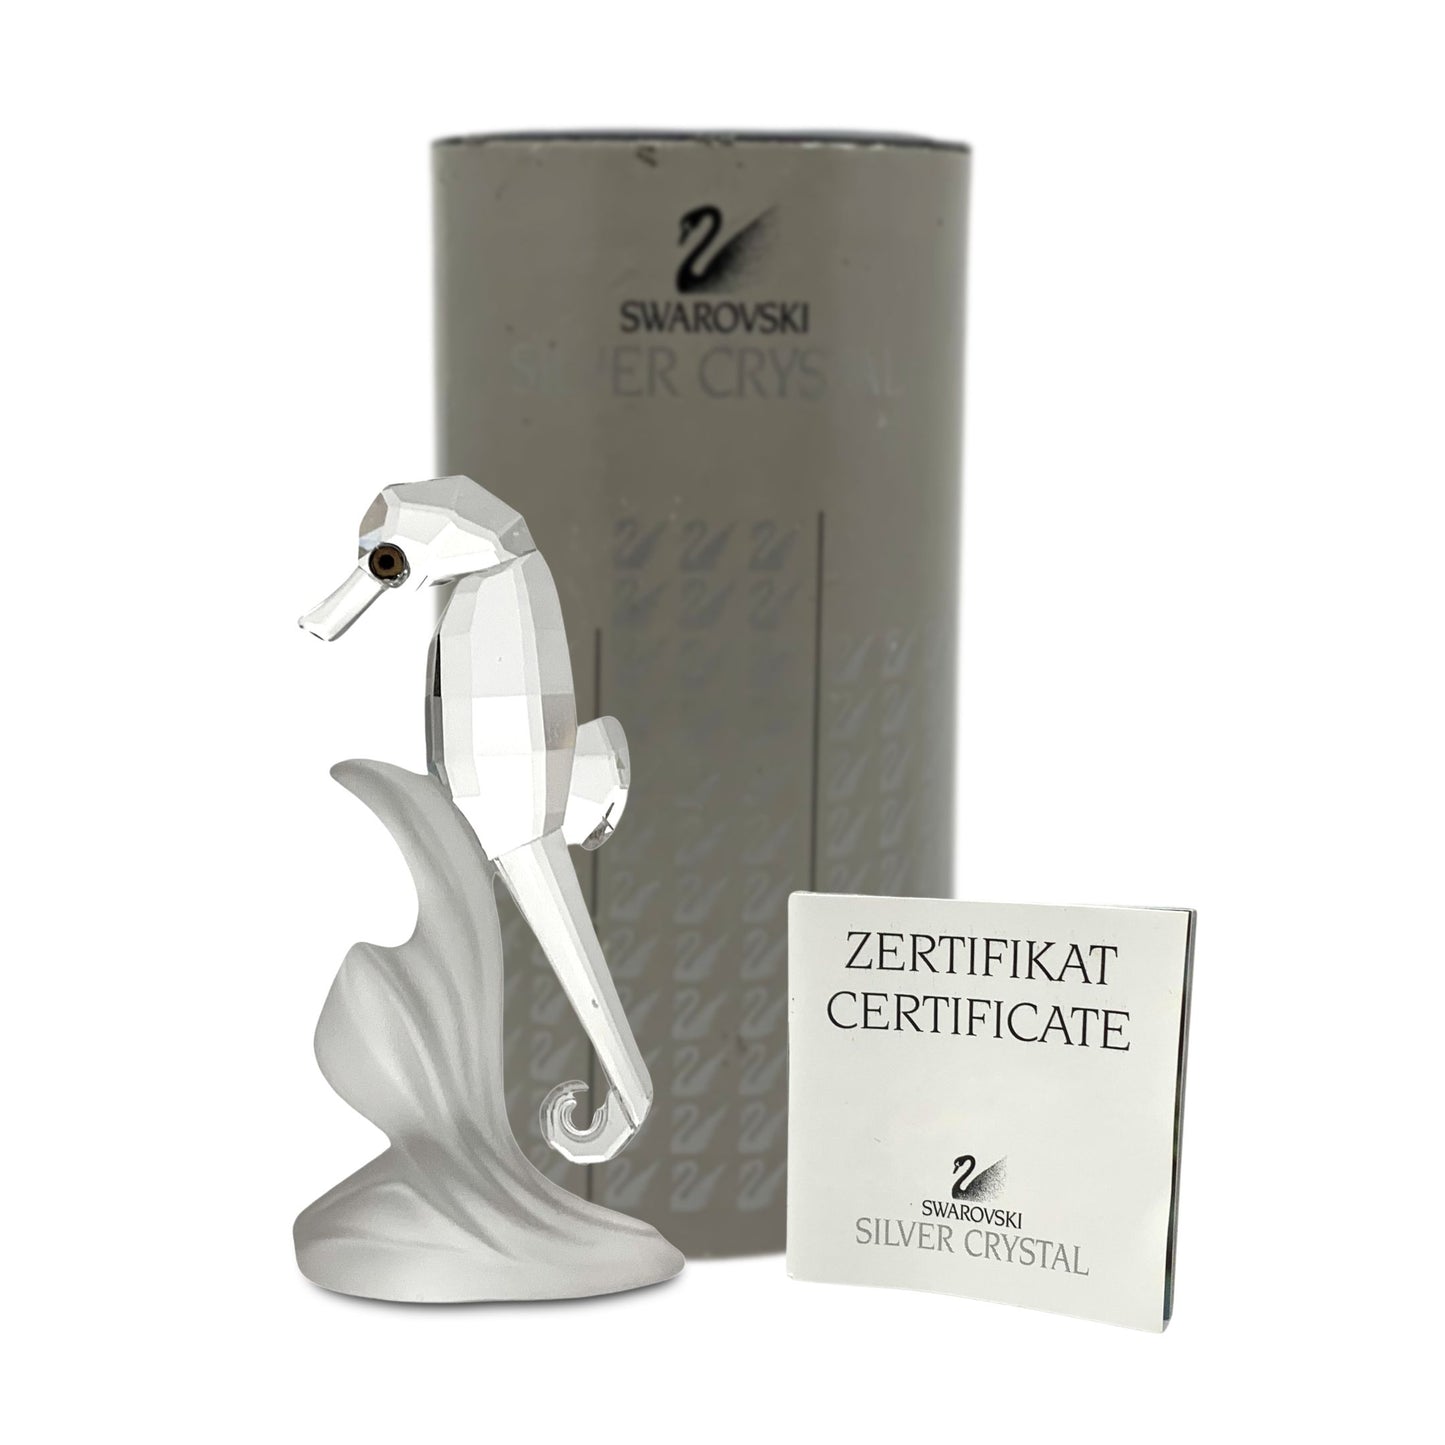 Swarovski Crystal "Seahorse" Figurine 7614 Signed by Artist